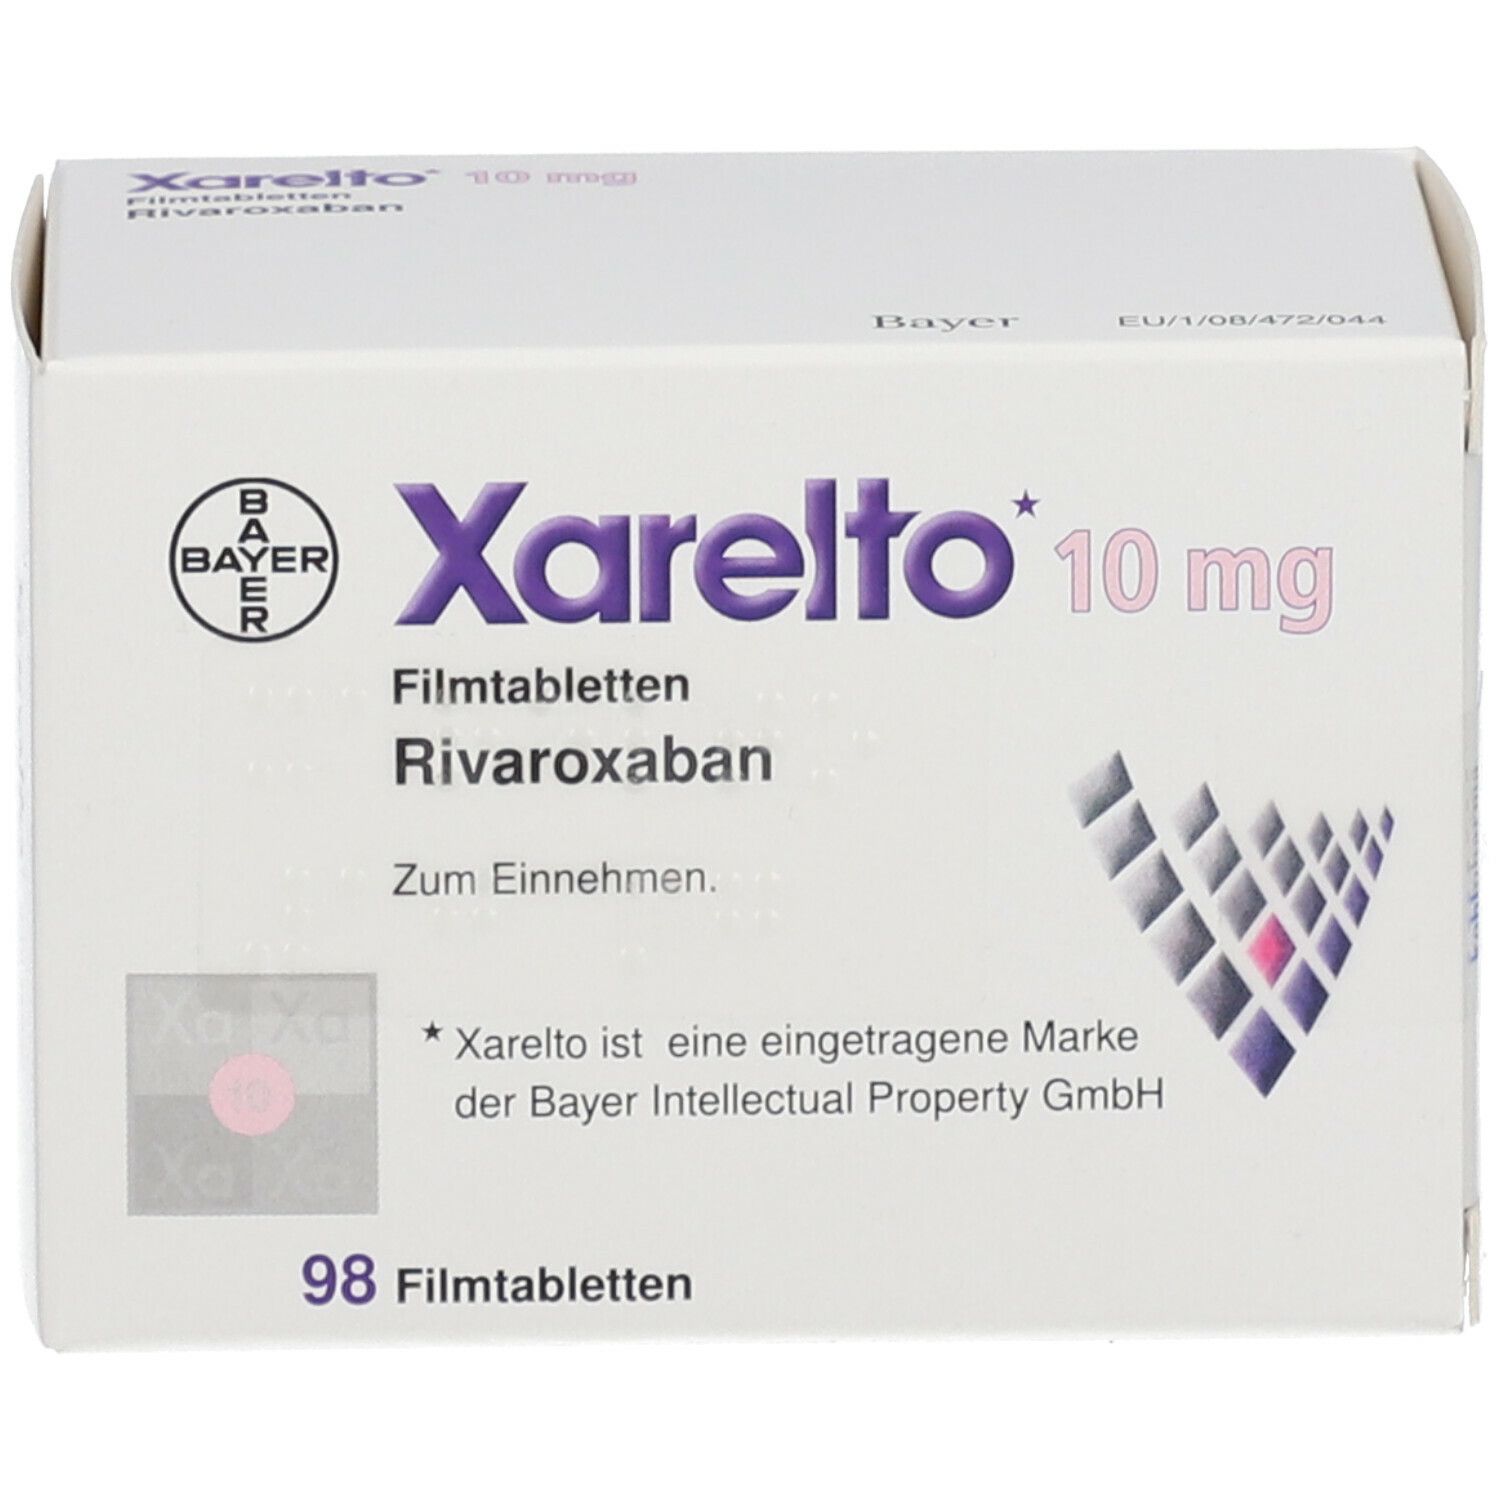 Xarelto® 10 mg